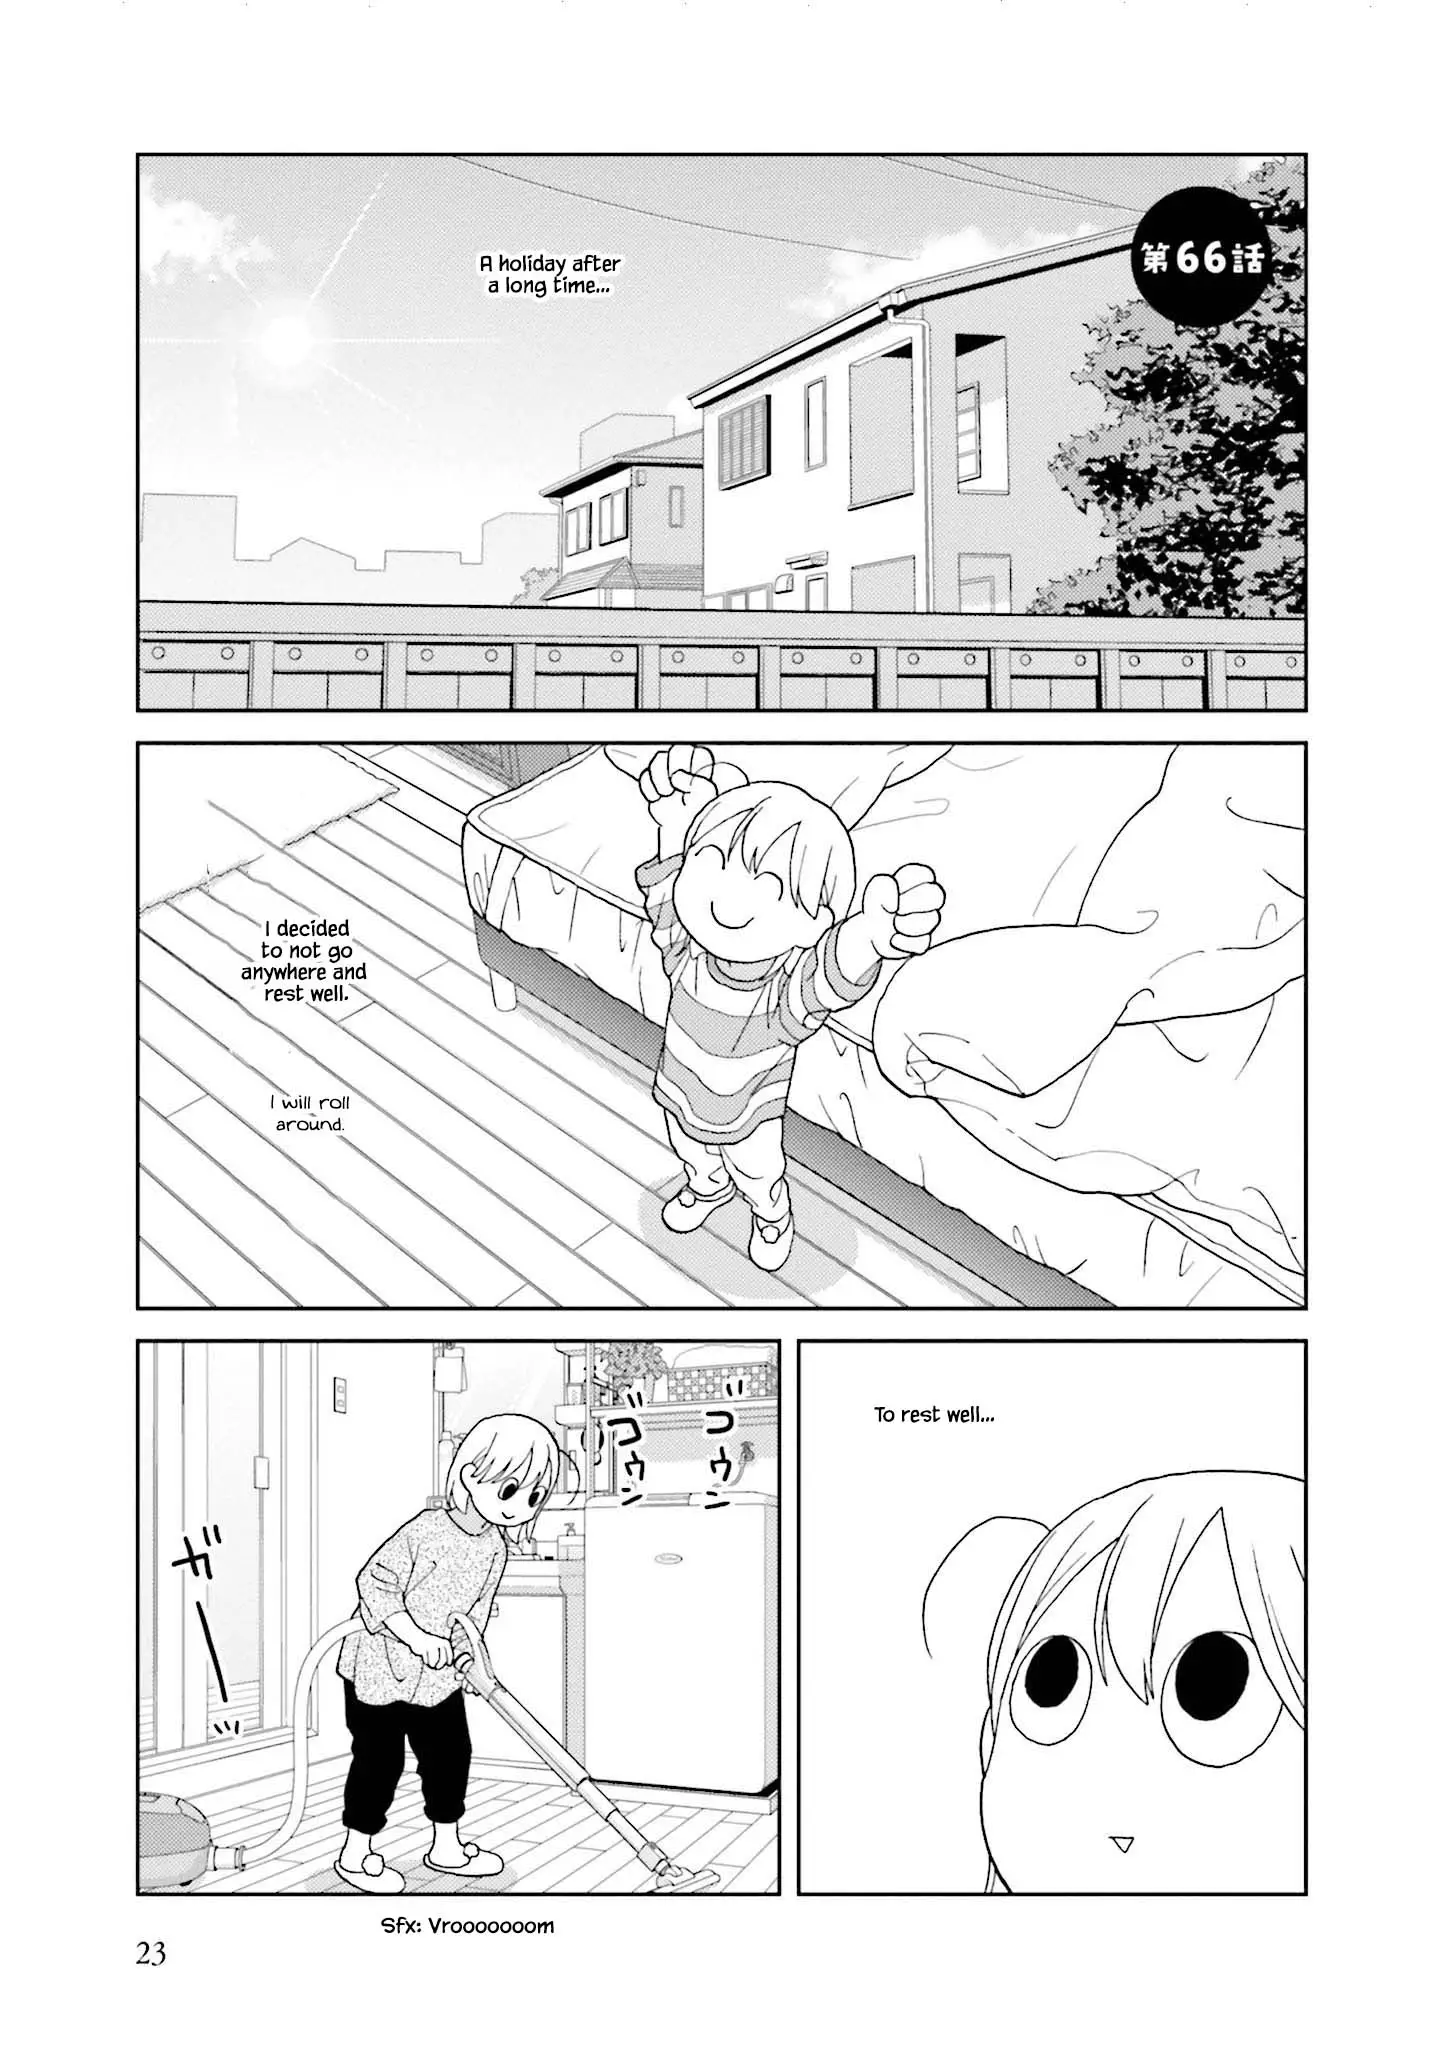 Takako-San - 66 page 1-03c323ab